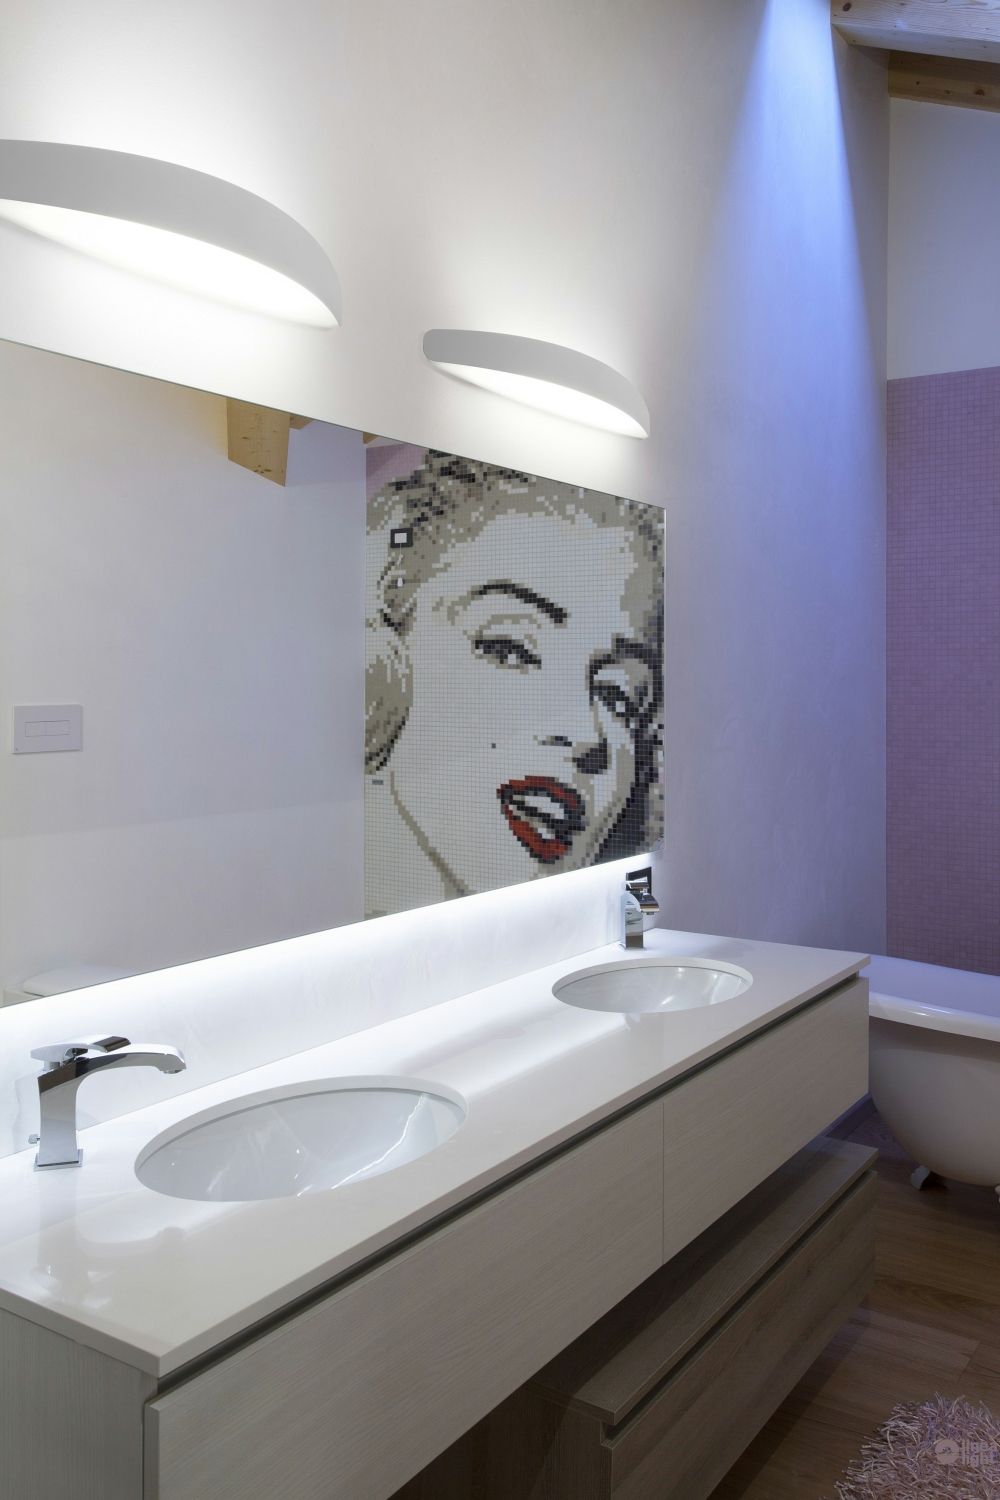 The beautiful bathroom lighting Modelight Blog Picture